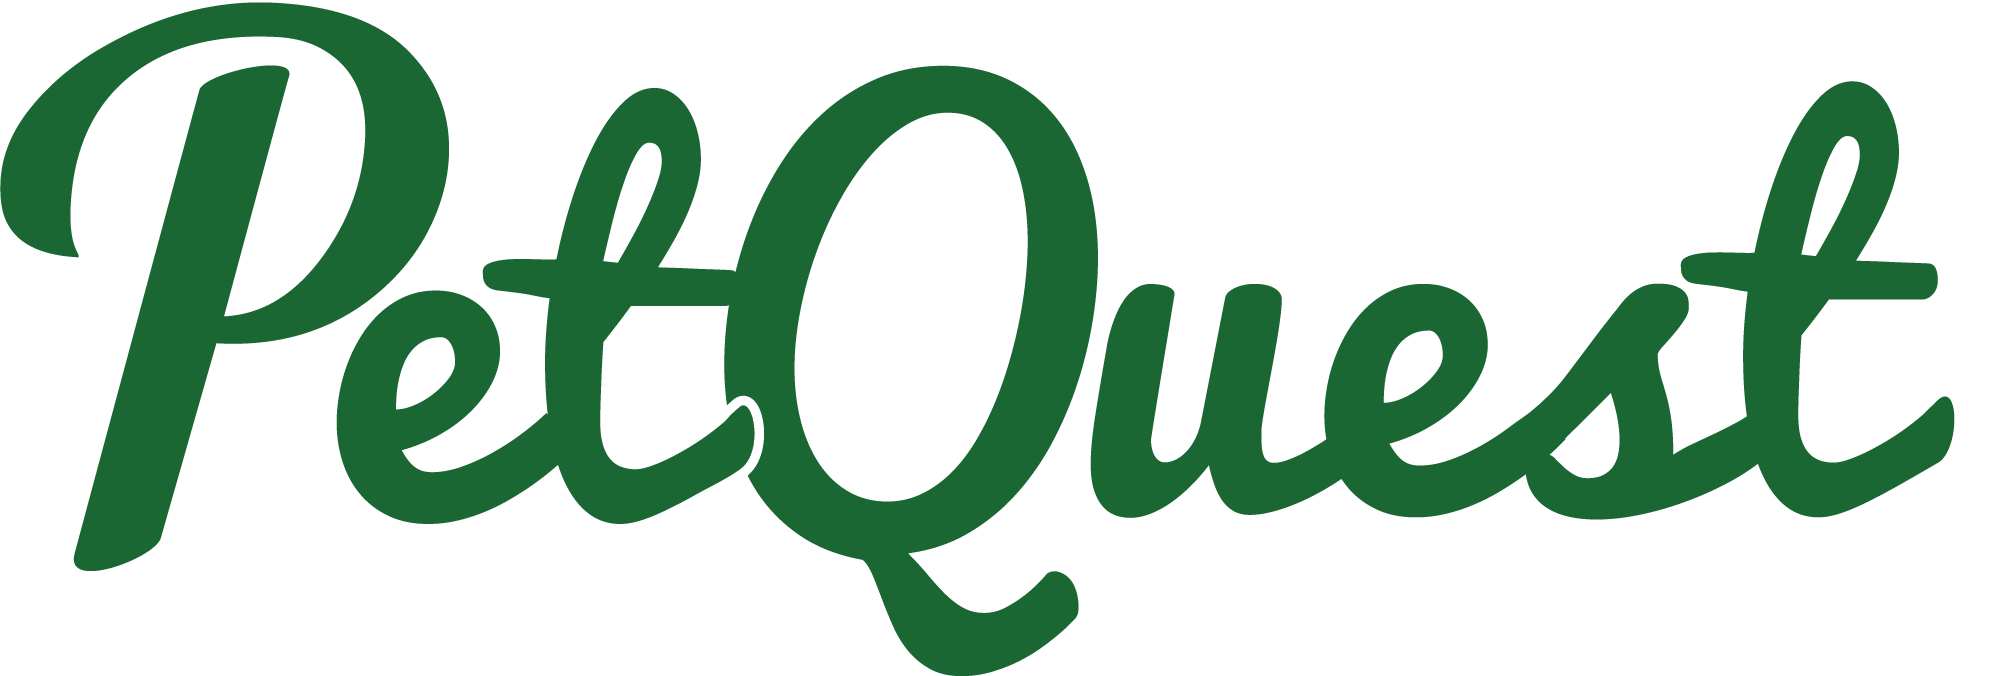 Pet Quest logo